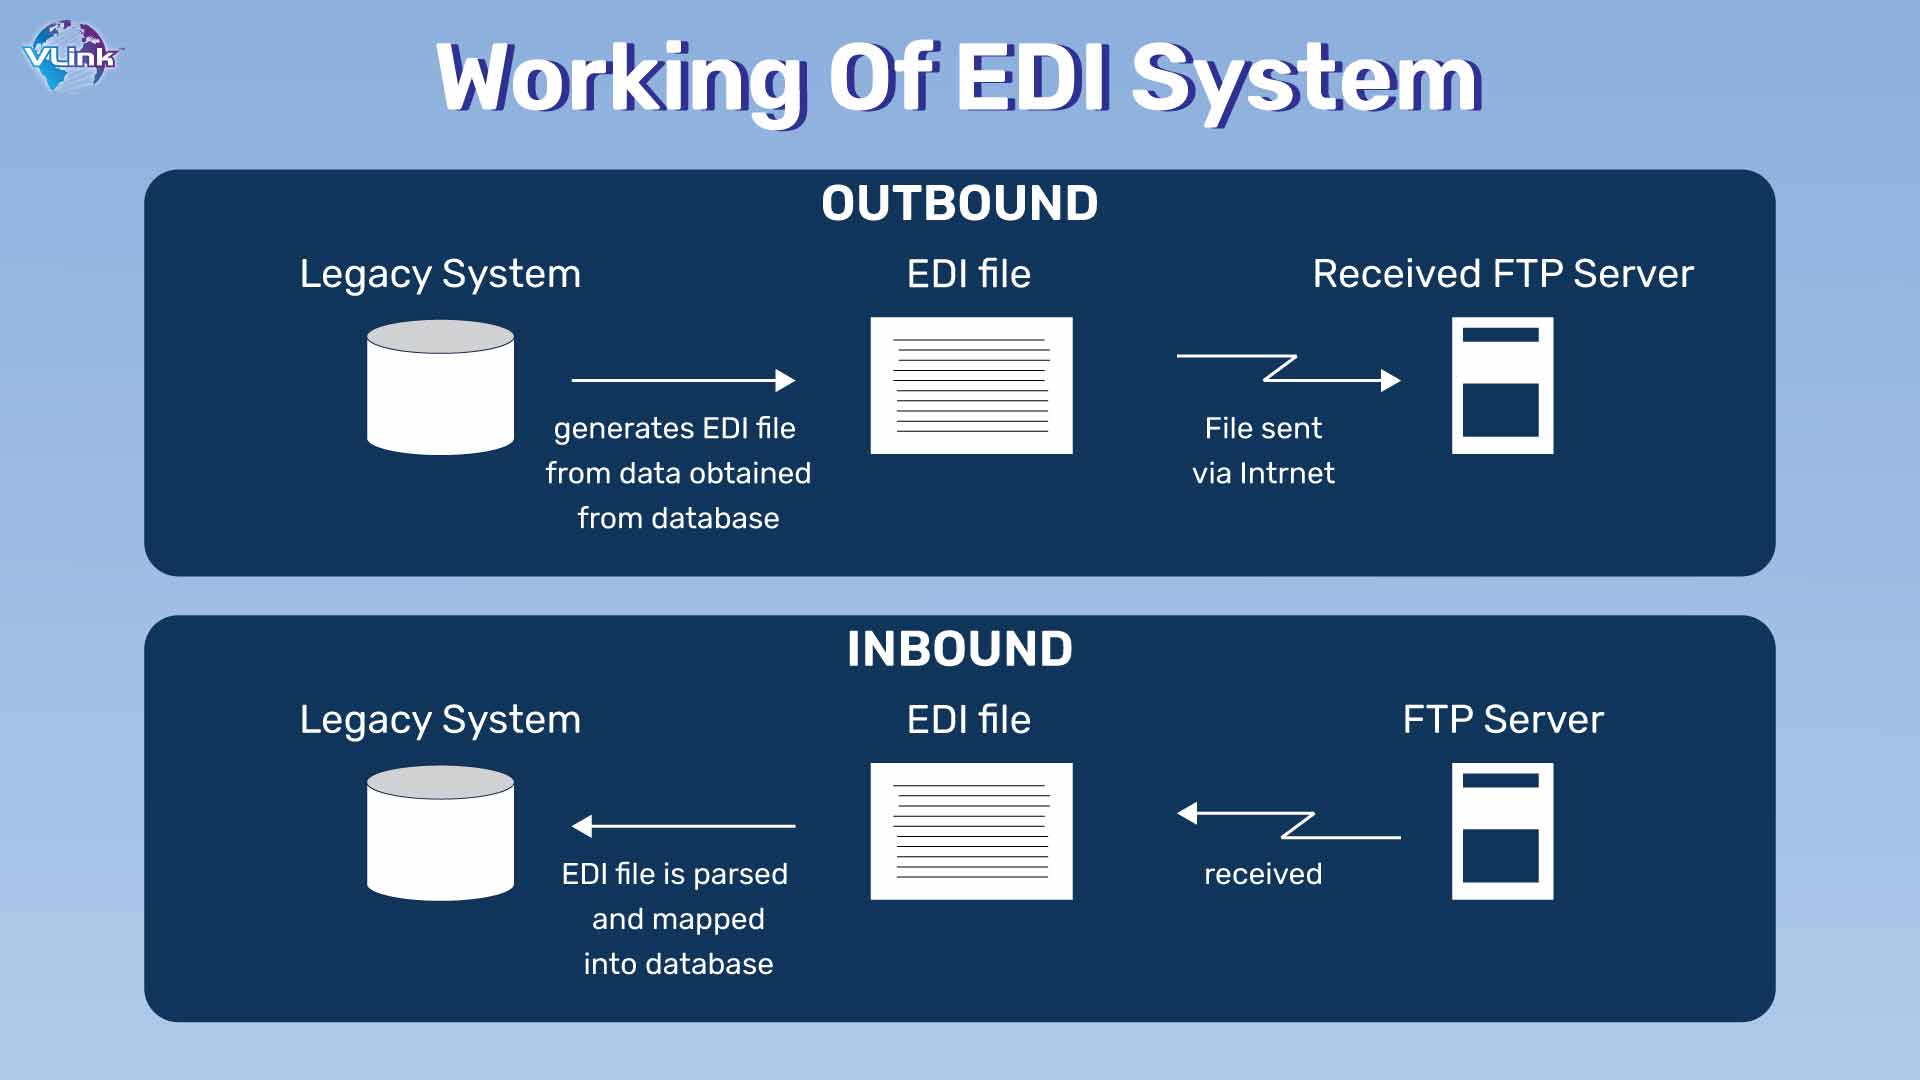 Wroking Of EDI System